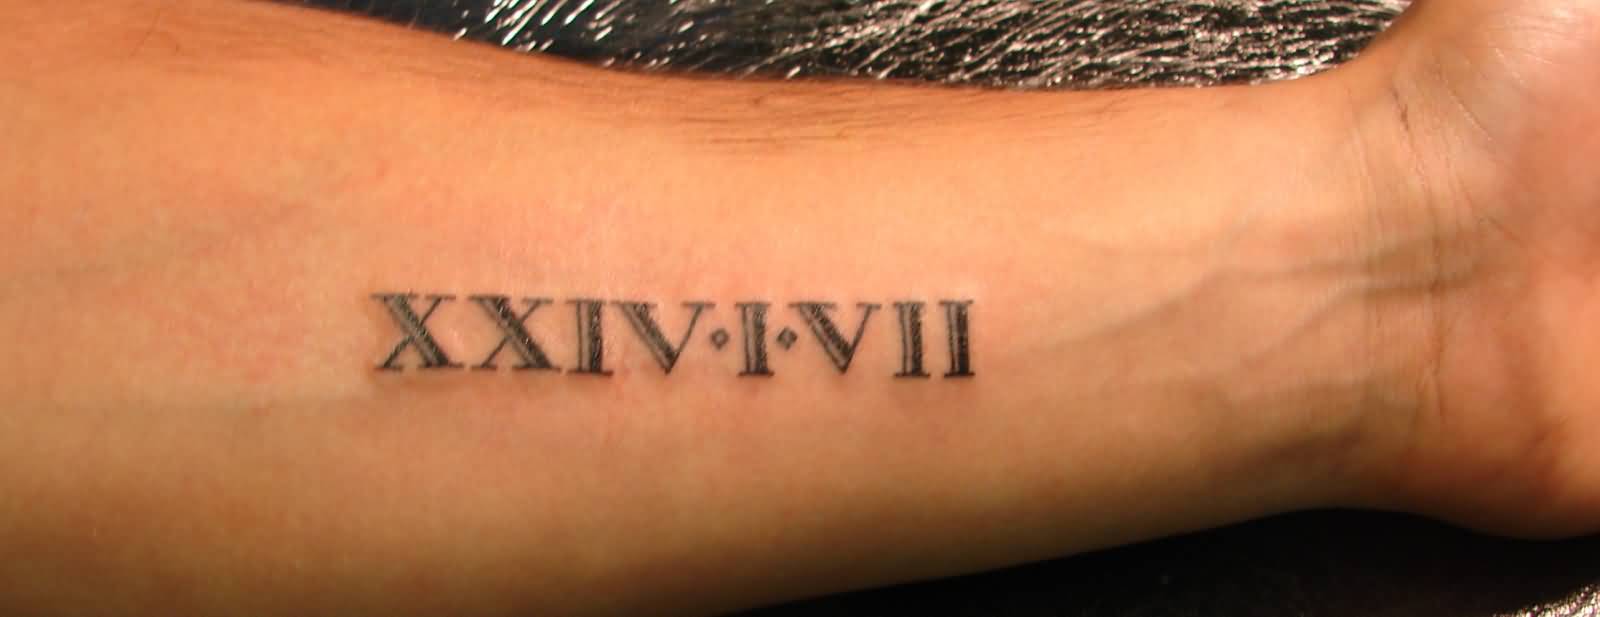 Roman Numeral Tattoo On Forearm